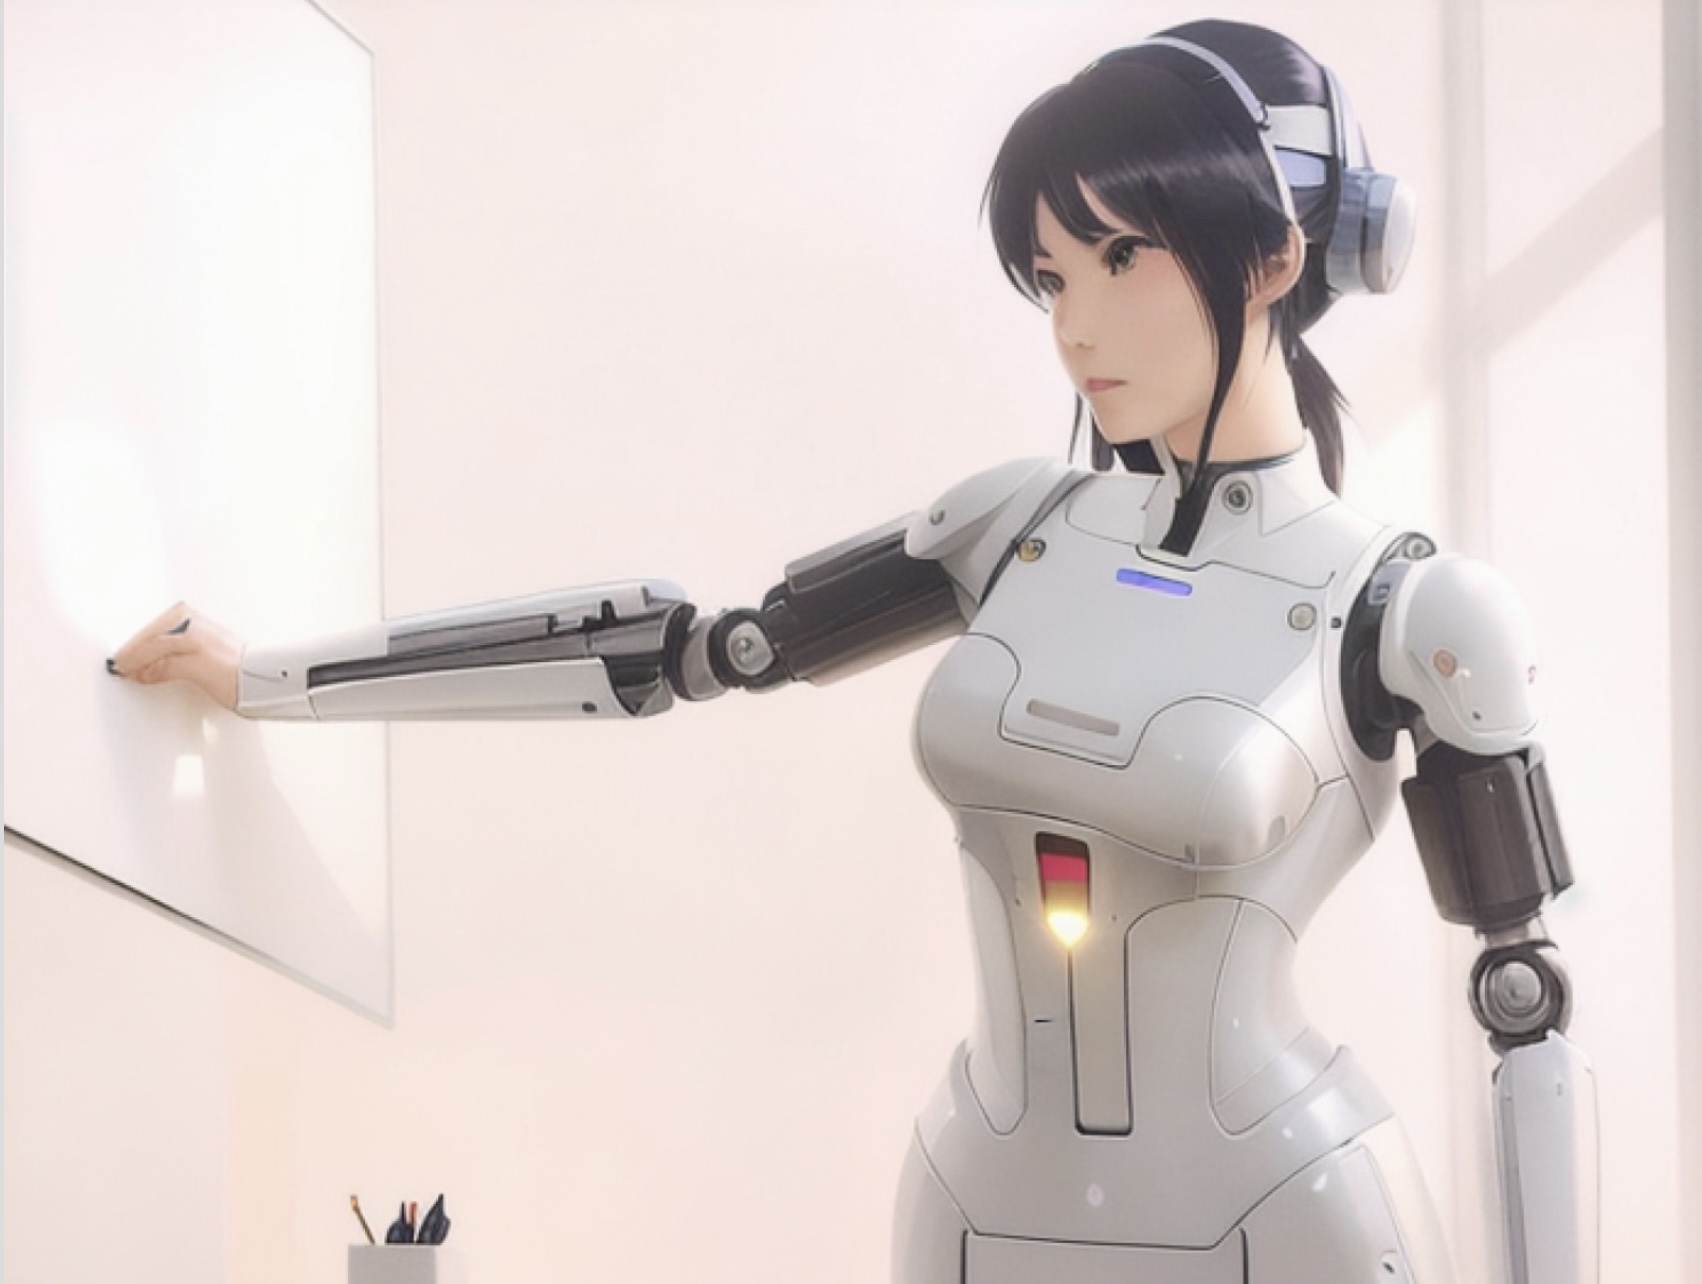 J-Manga Lady-robots design in the office